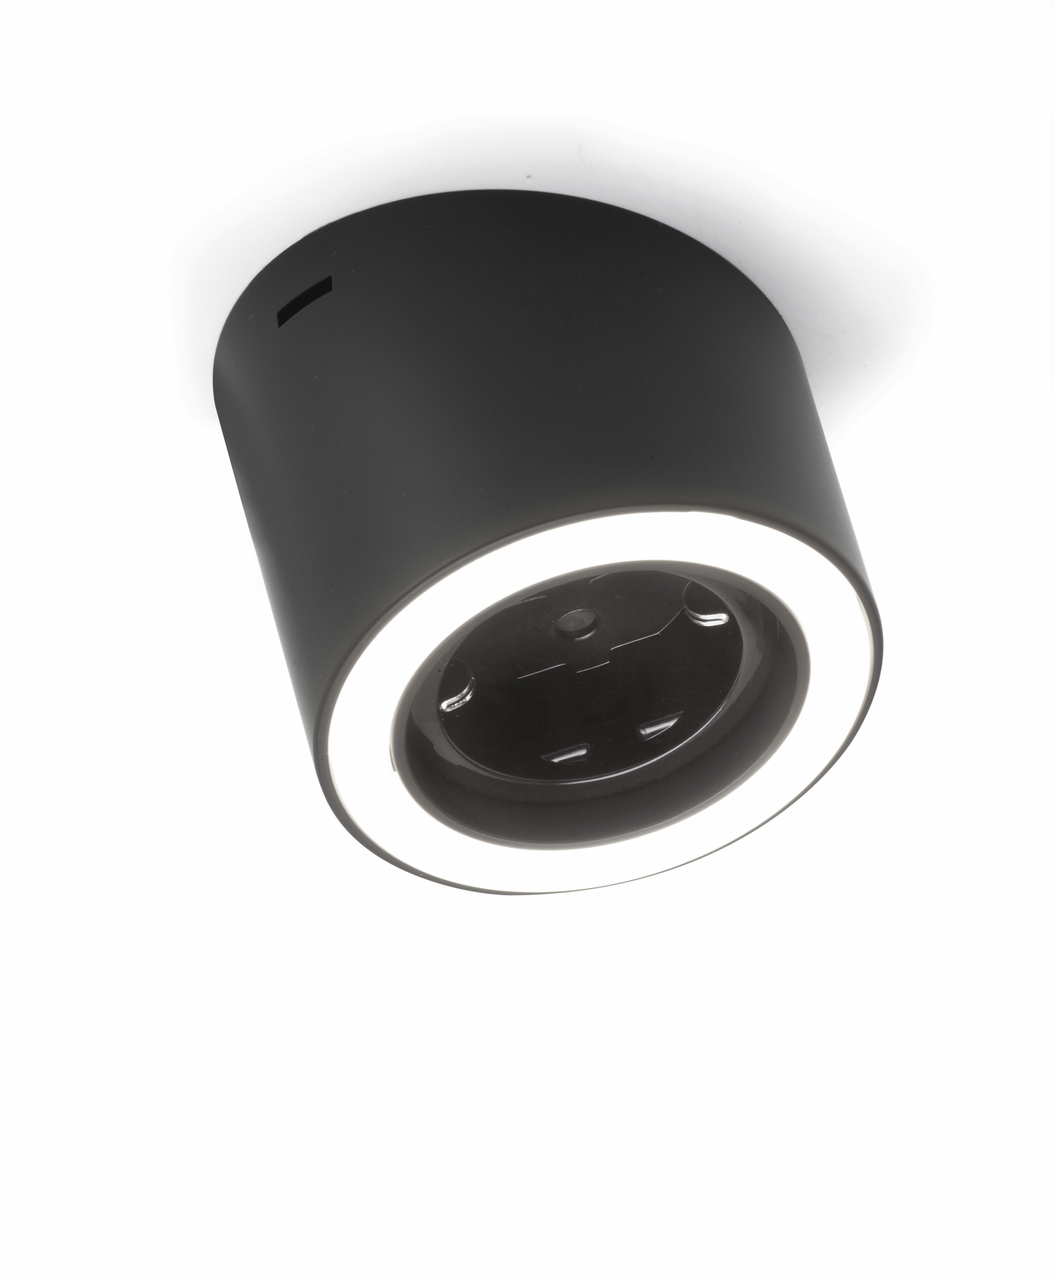  Unika 3 colour change LED, single lamp with earthed plug sockets, black matt